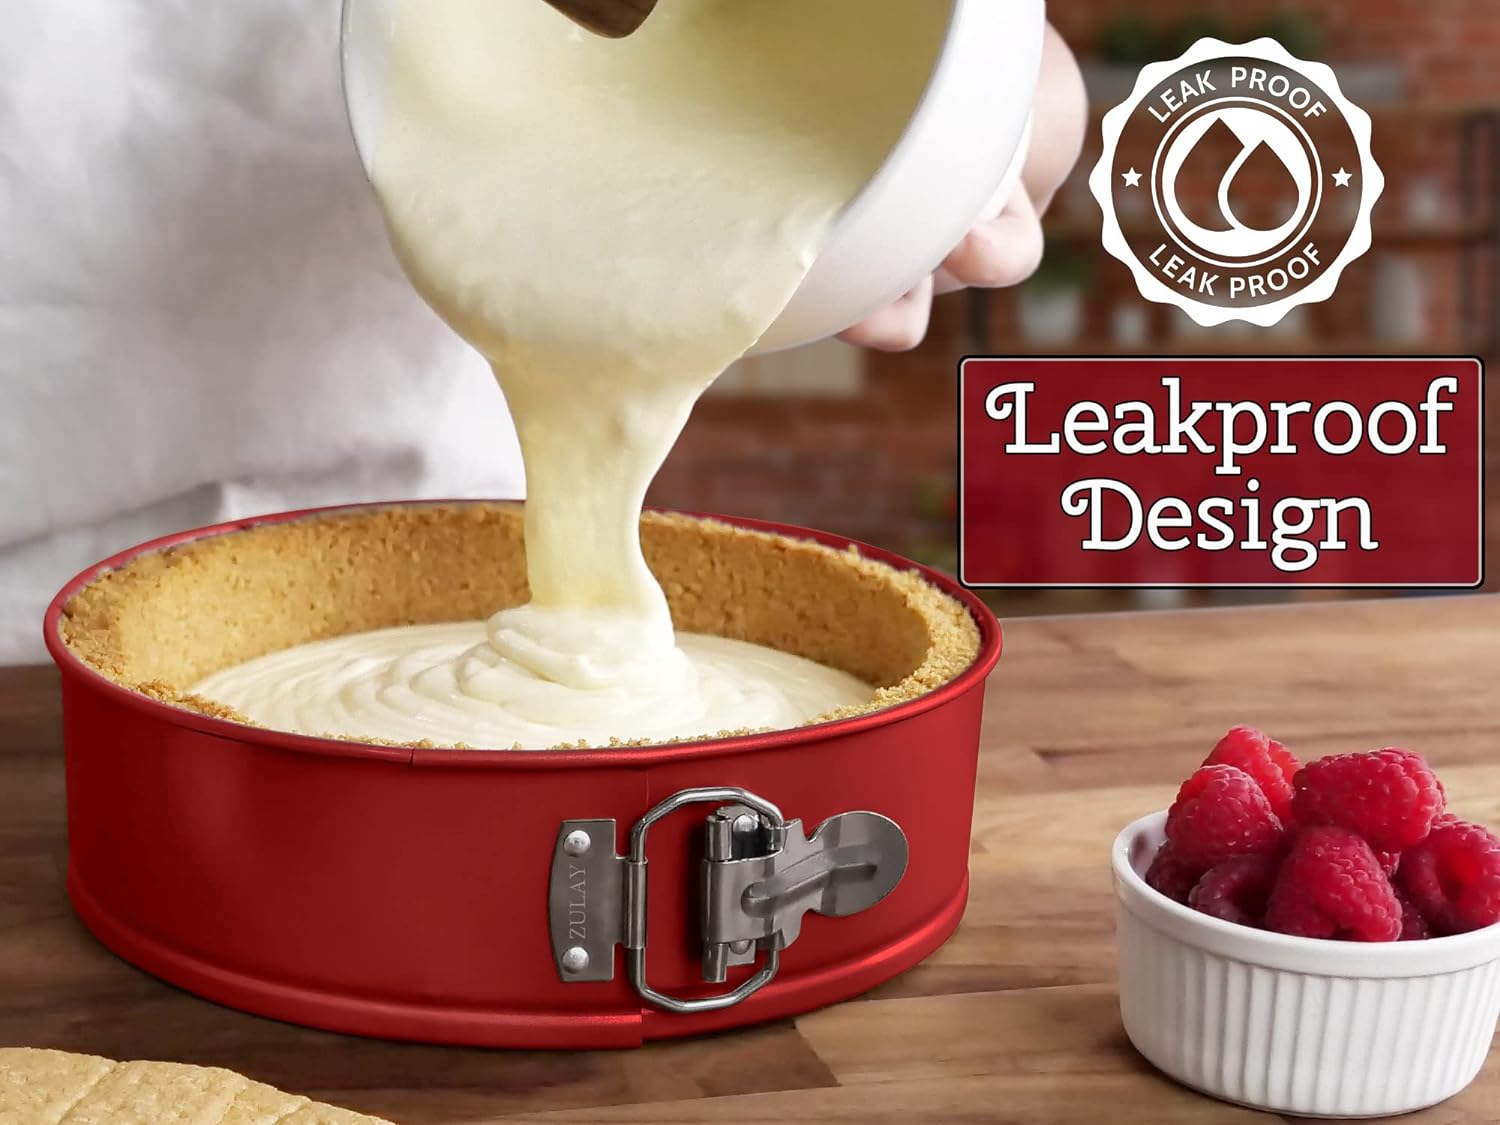 Cheesecake Pan - Springform Pan with Safe Non-Stick Coating